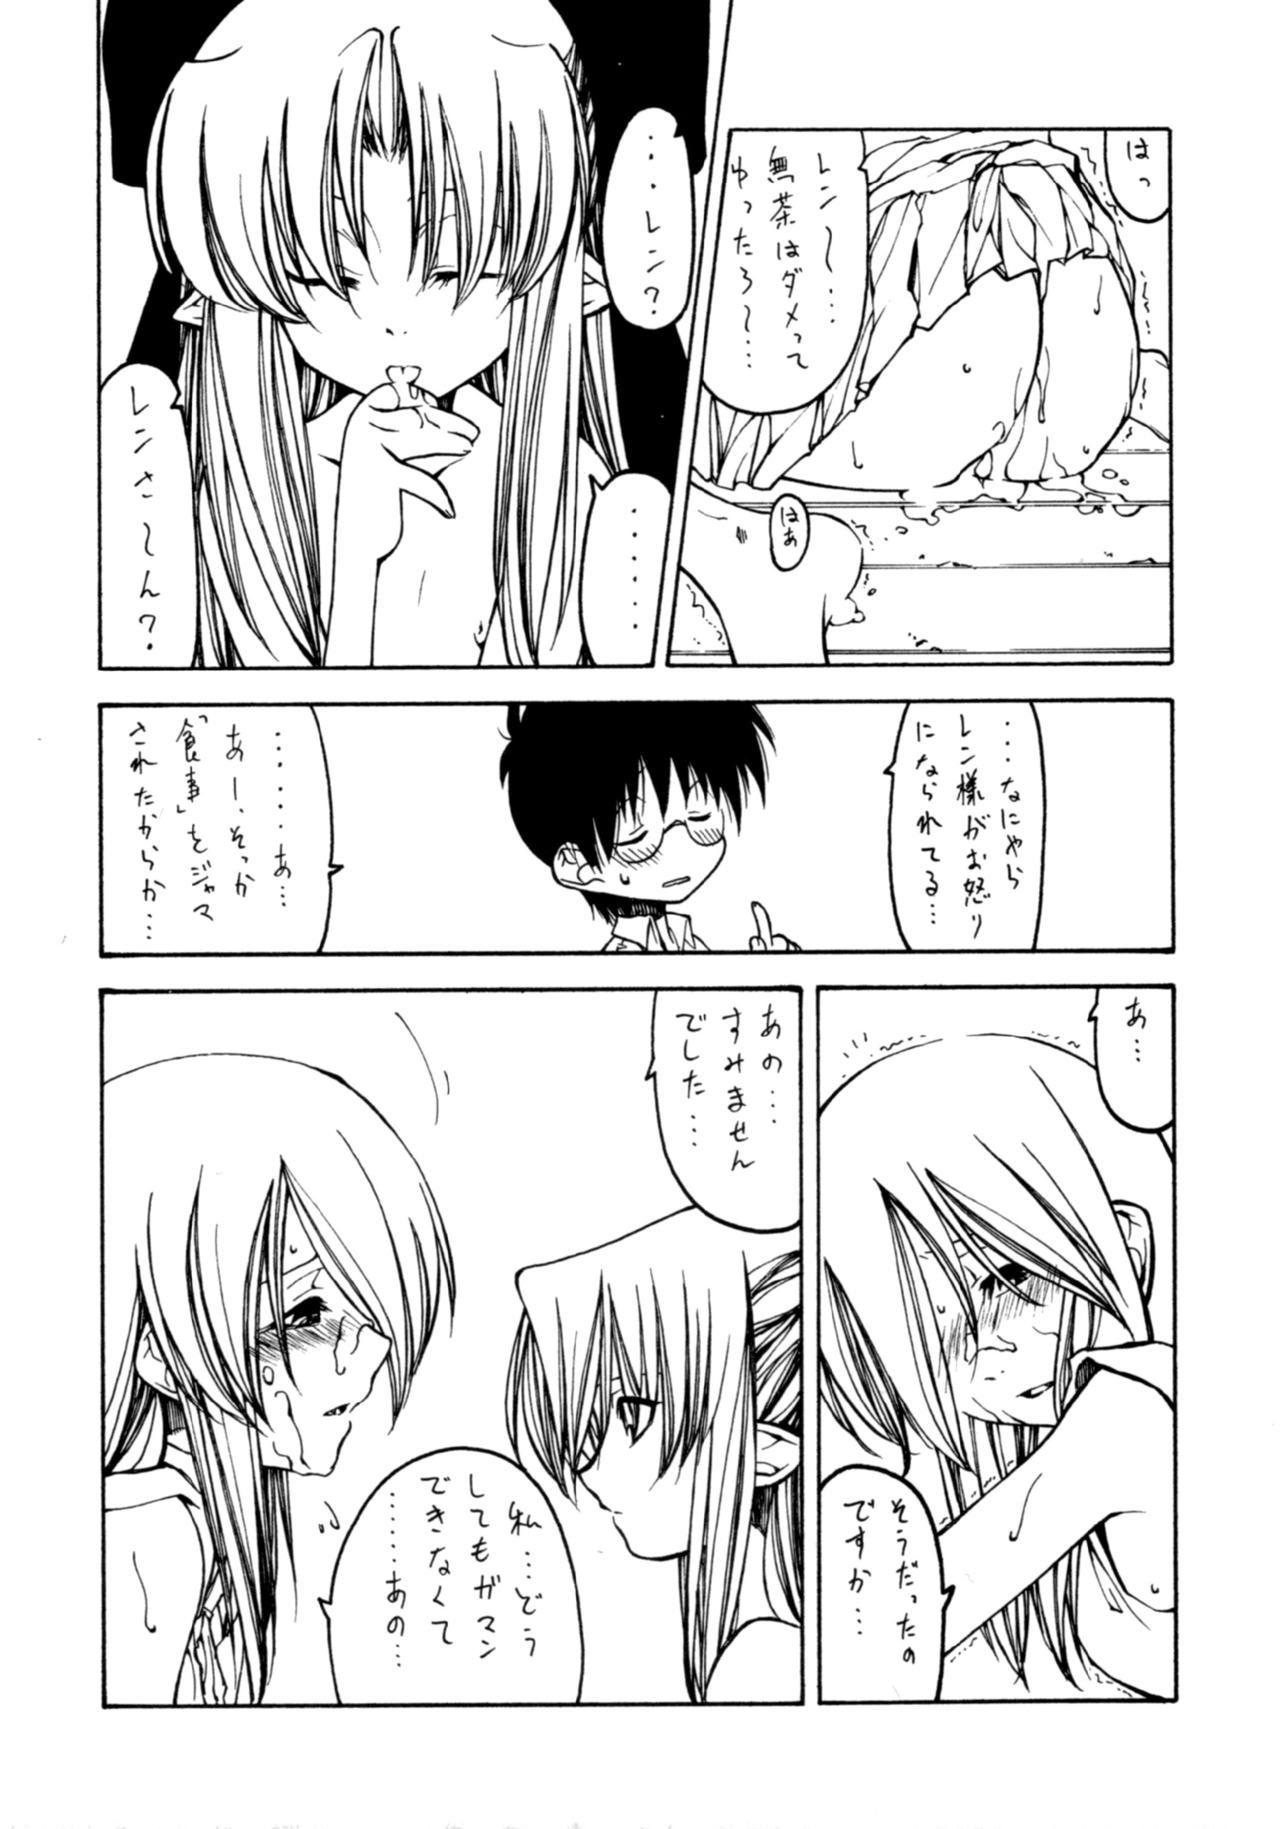 Nut Yoasobi - Tsukihime Kissing - Page 10